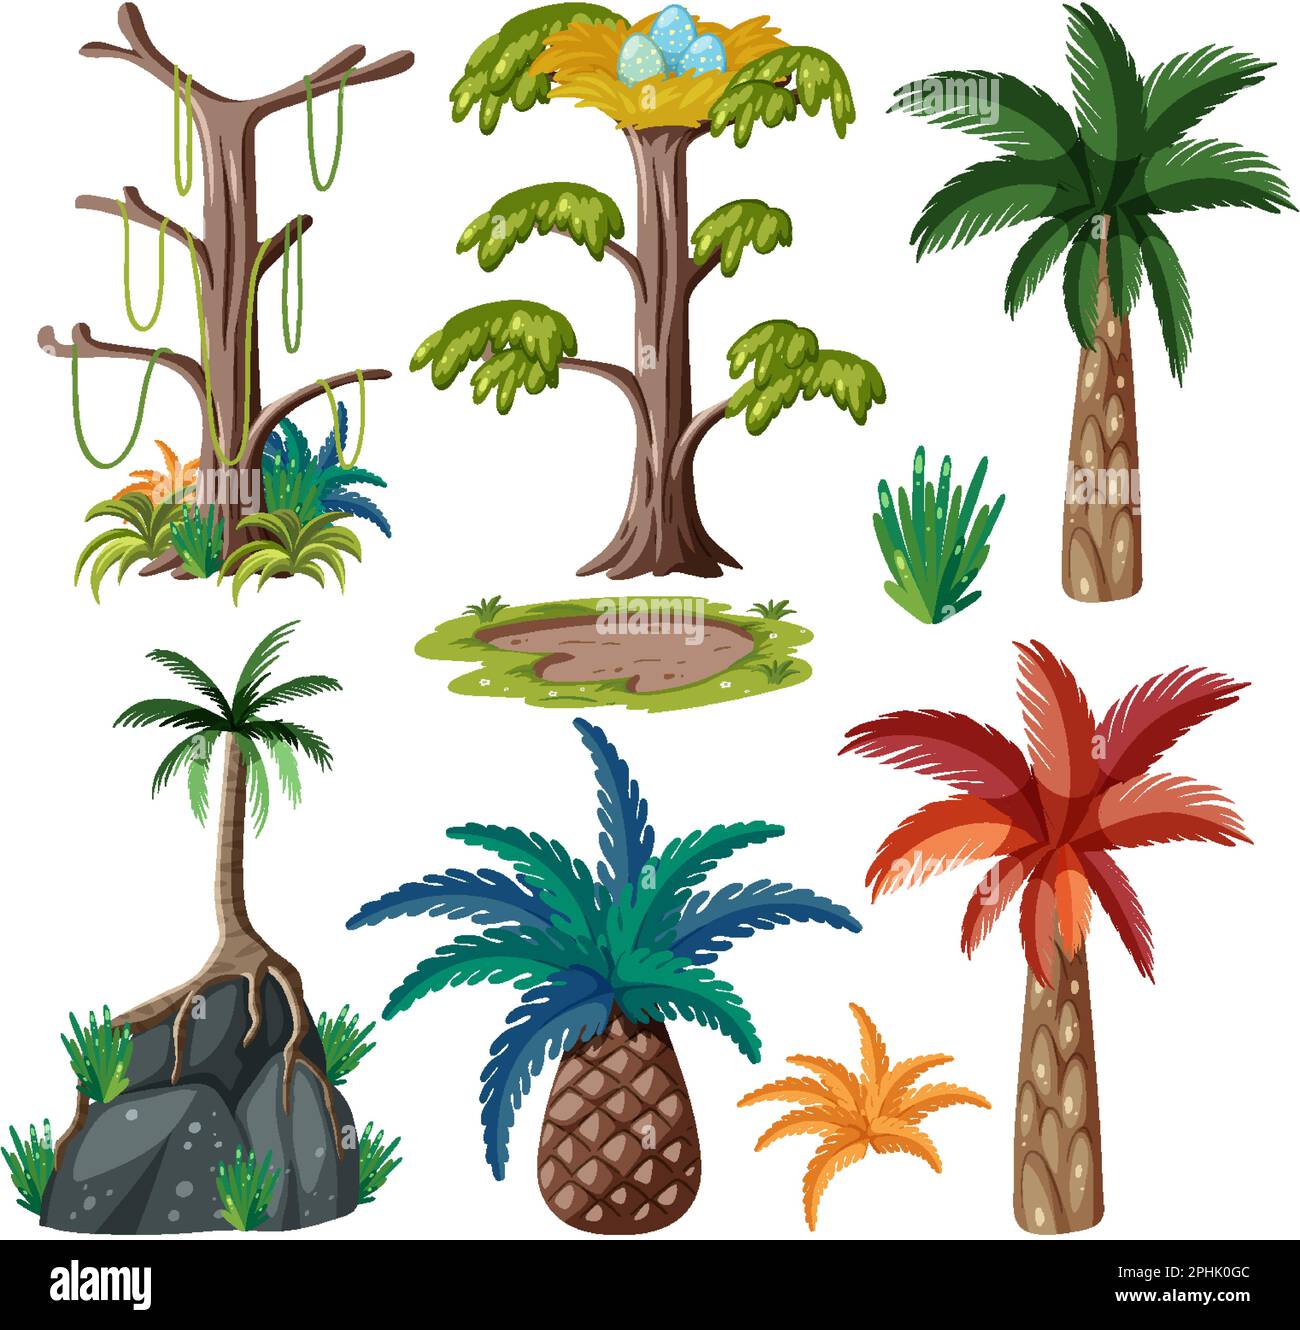 Prehistoric Tree and Plant Vector Set illustration Stock Vector